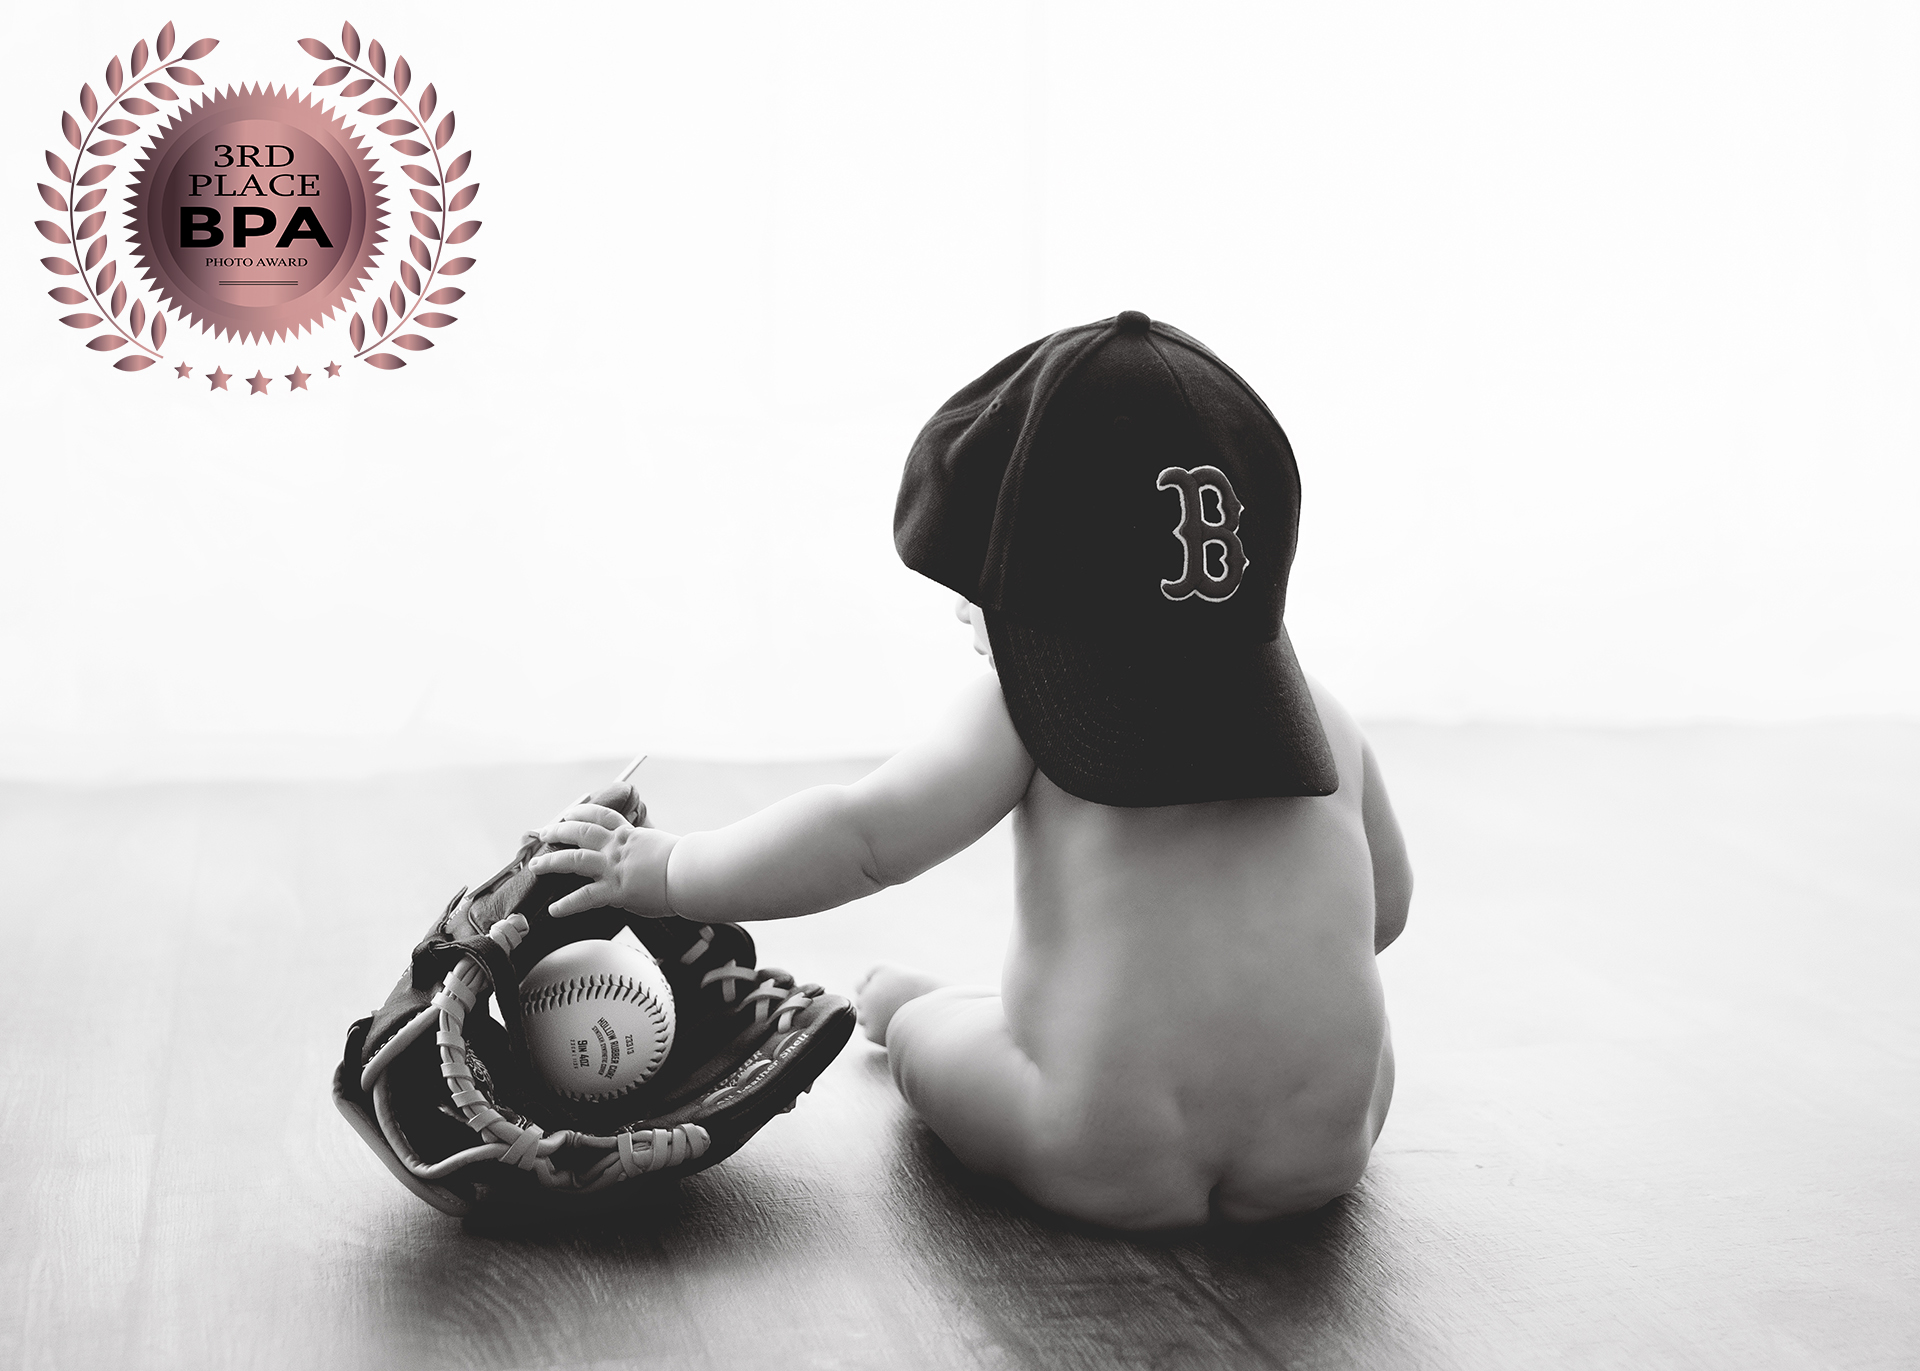 Babies & Photographers Photo Awards